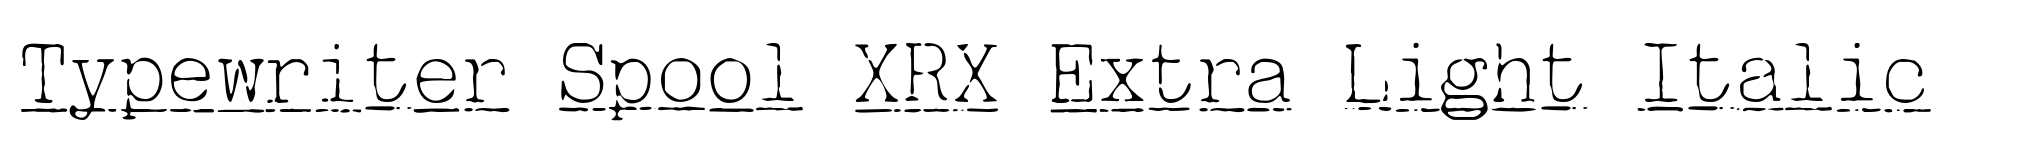 Typewriter Spool XRX Extra Light Italic image